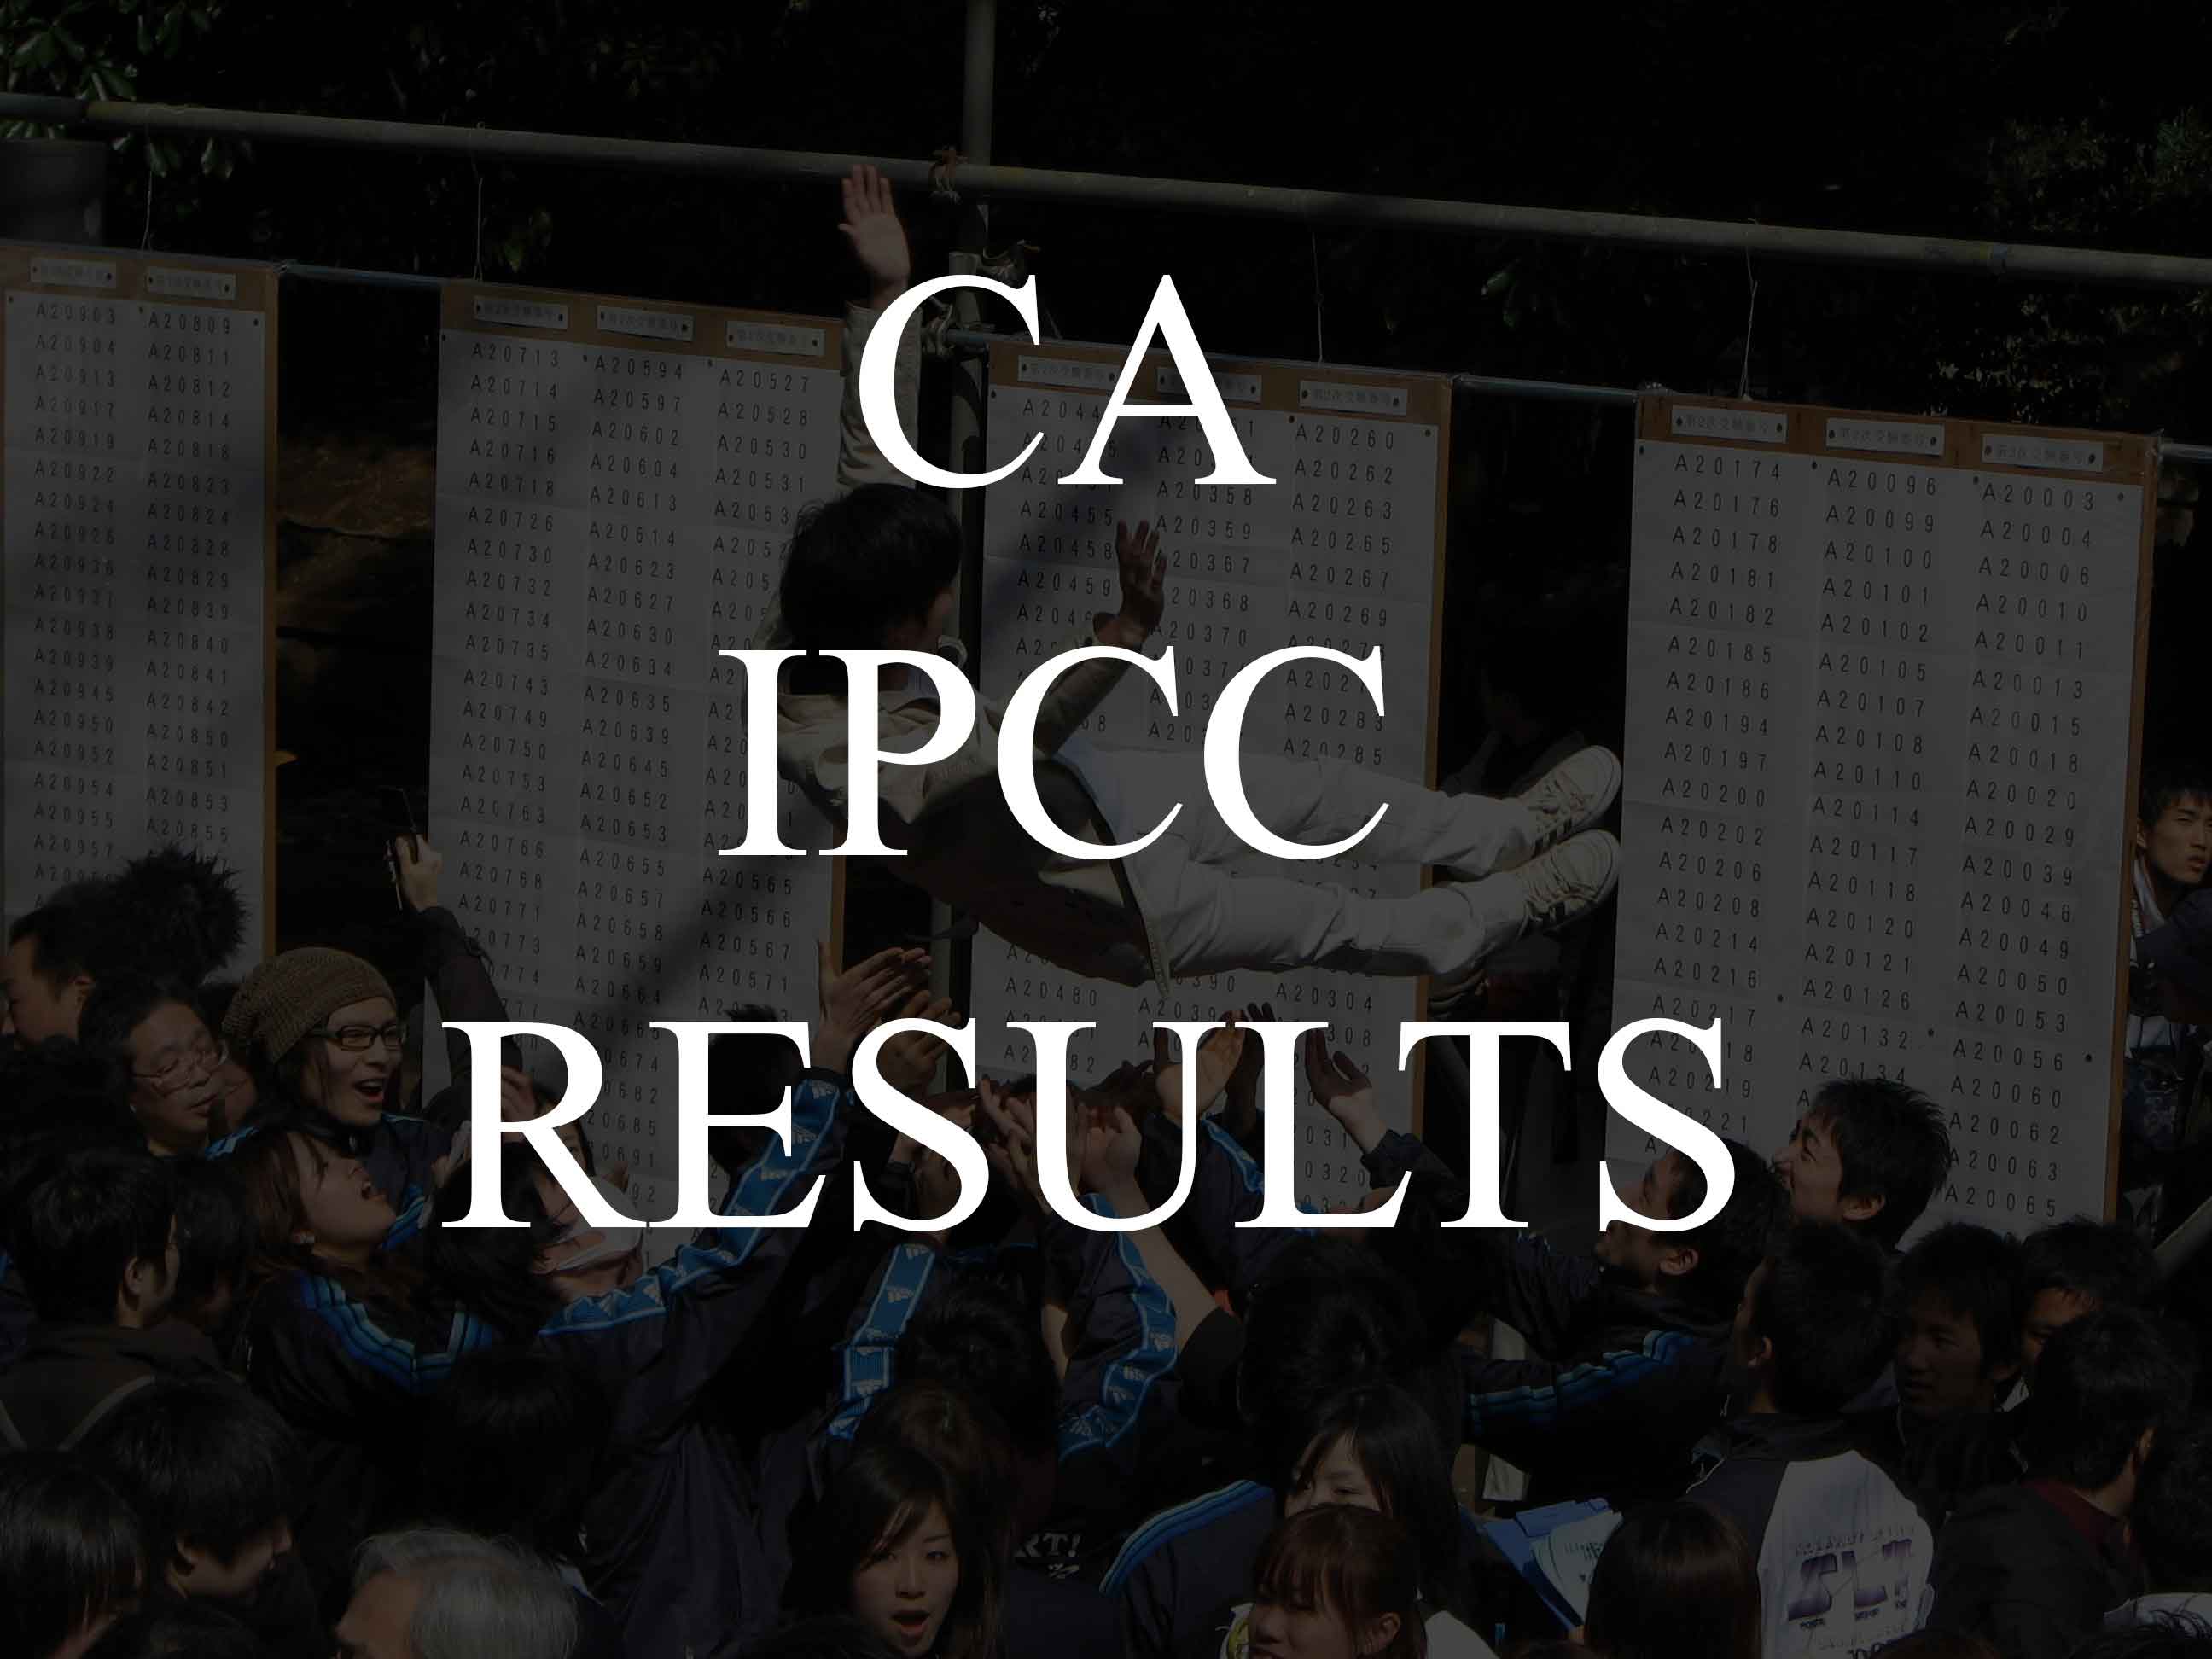 ca ipcc result